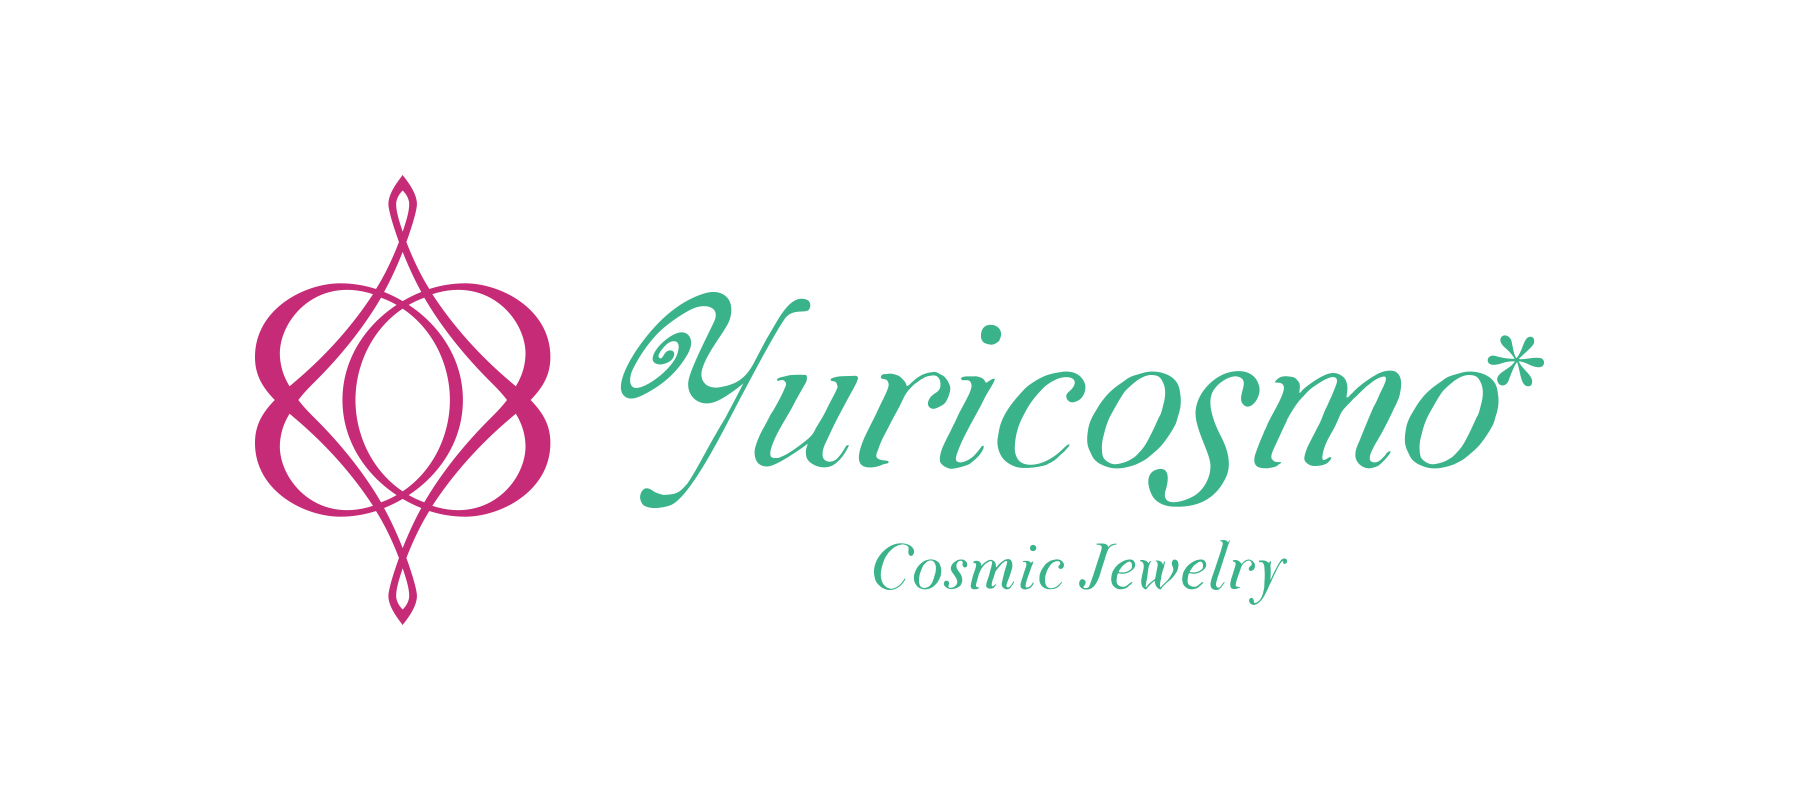 Cosmic Jewelry Yuricosmo*